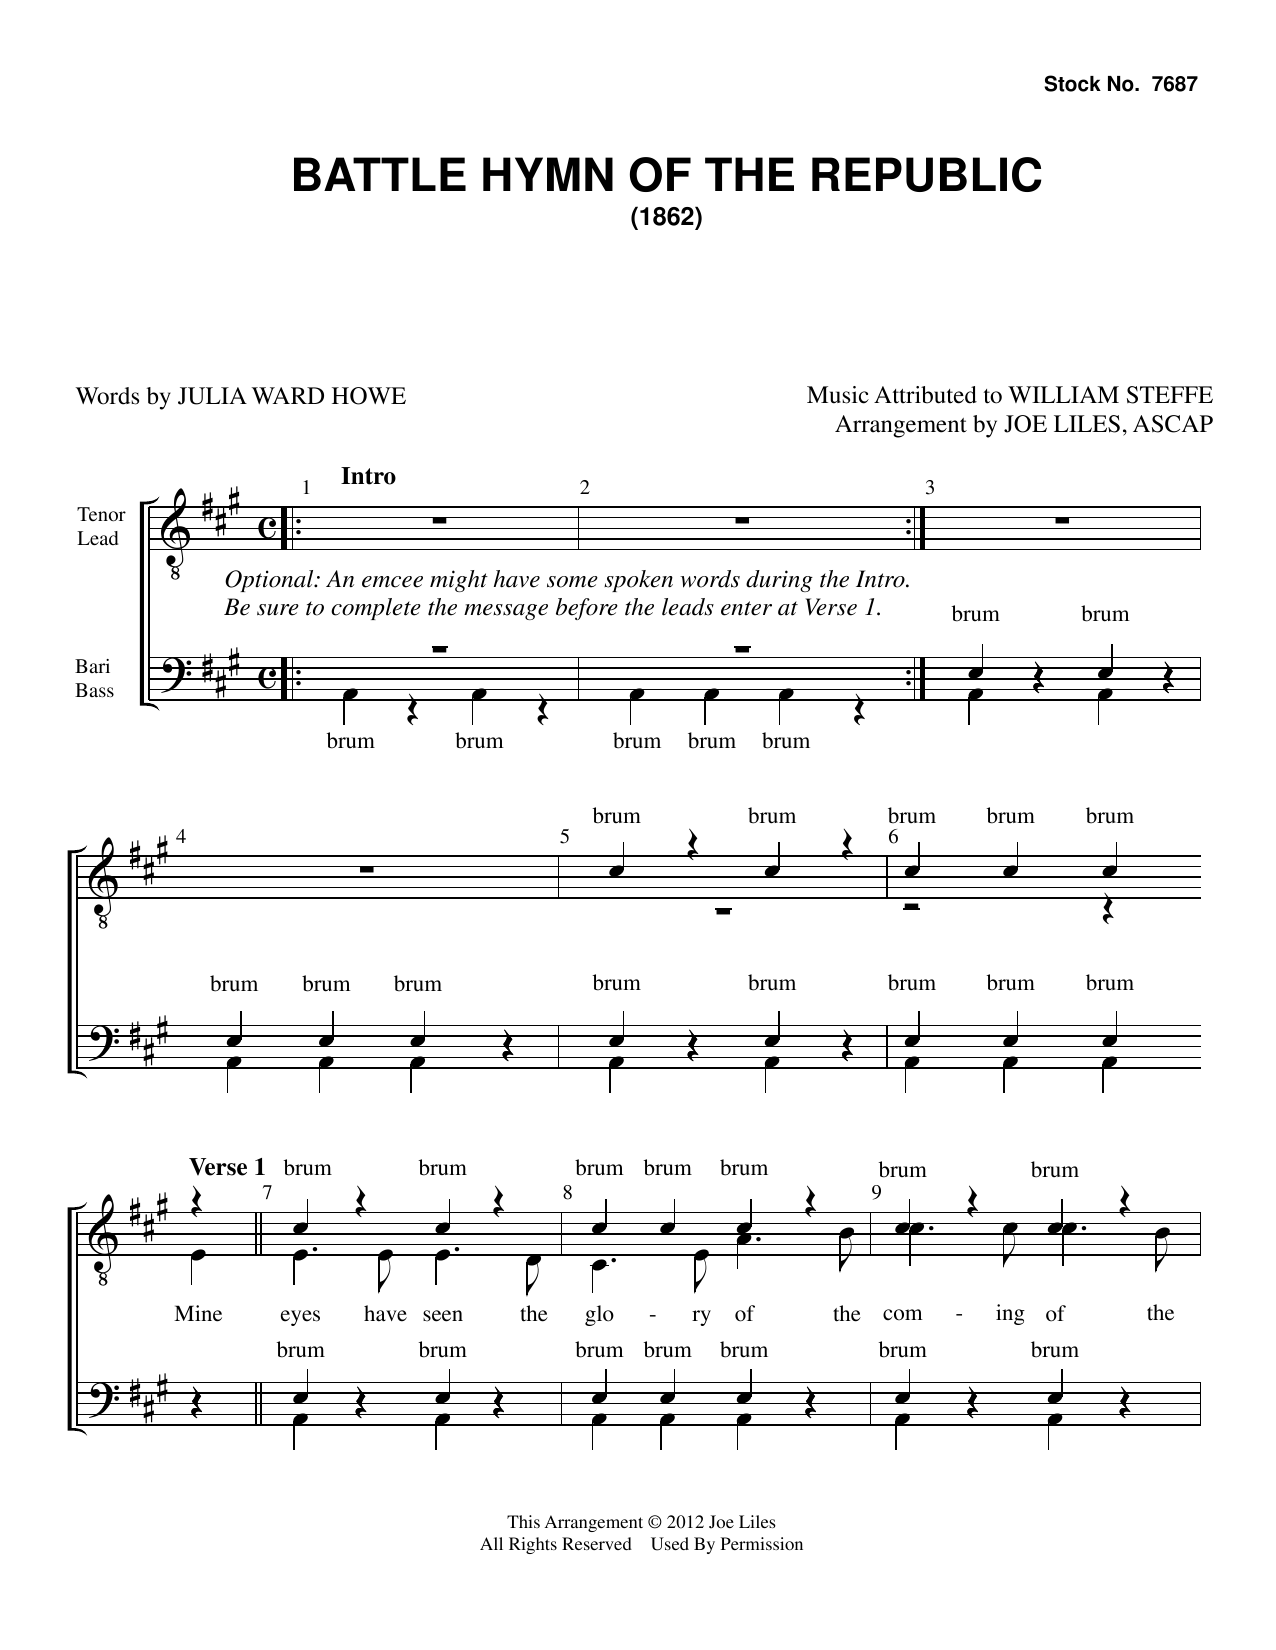 Download Julia Ward Howe The Battle Hymn of the Republic (arr. Joe Liles) Sheet Music and learn how to play TTBB Choir PDF digital score in minutes